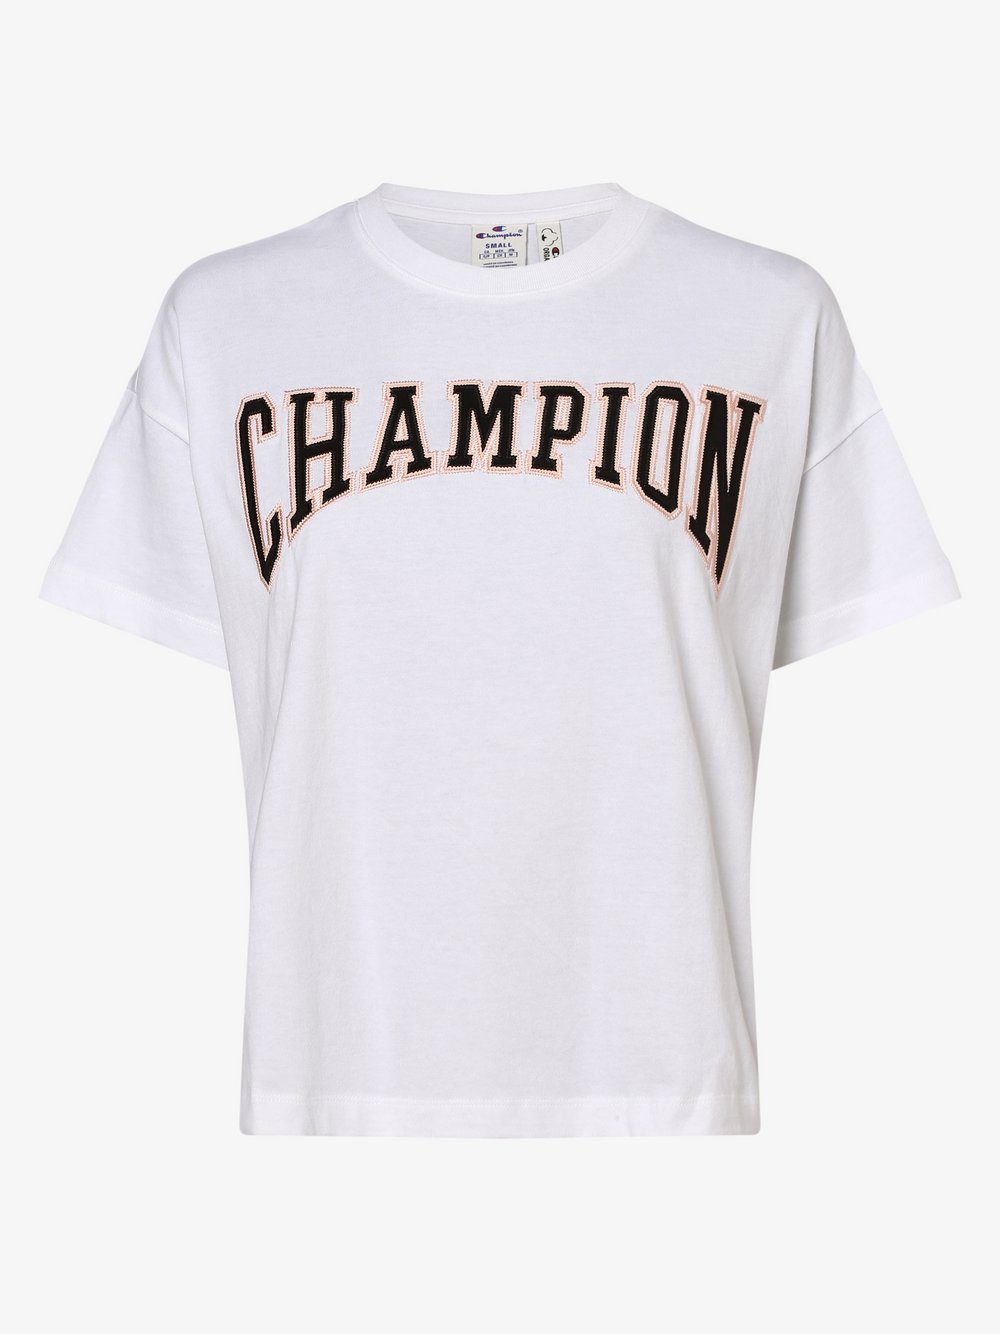 Champion - T-shirt damski, biały